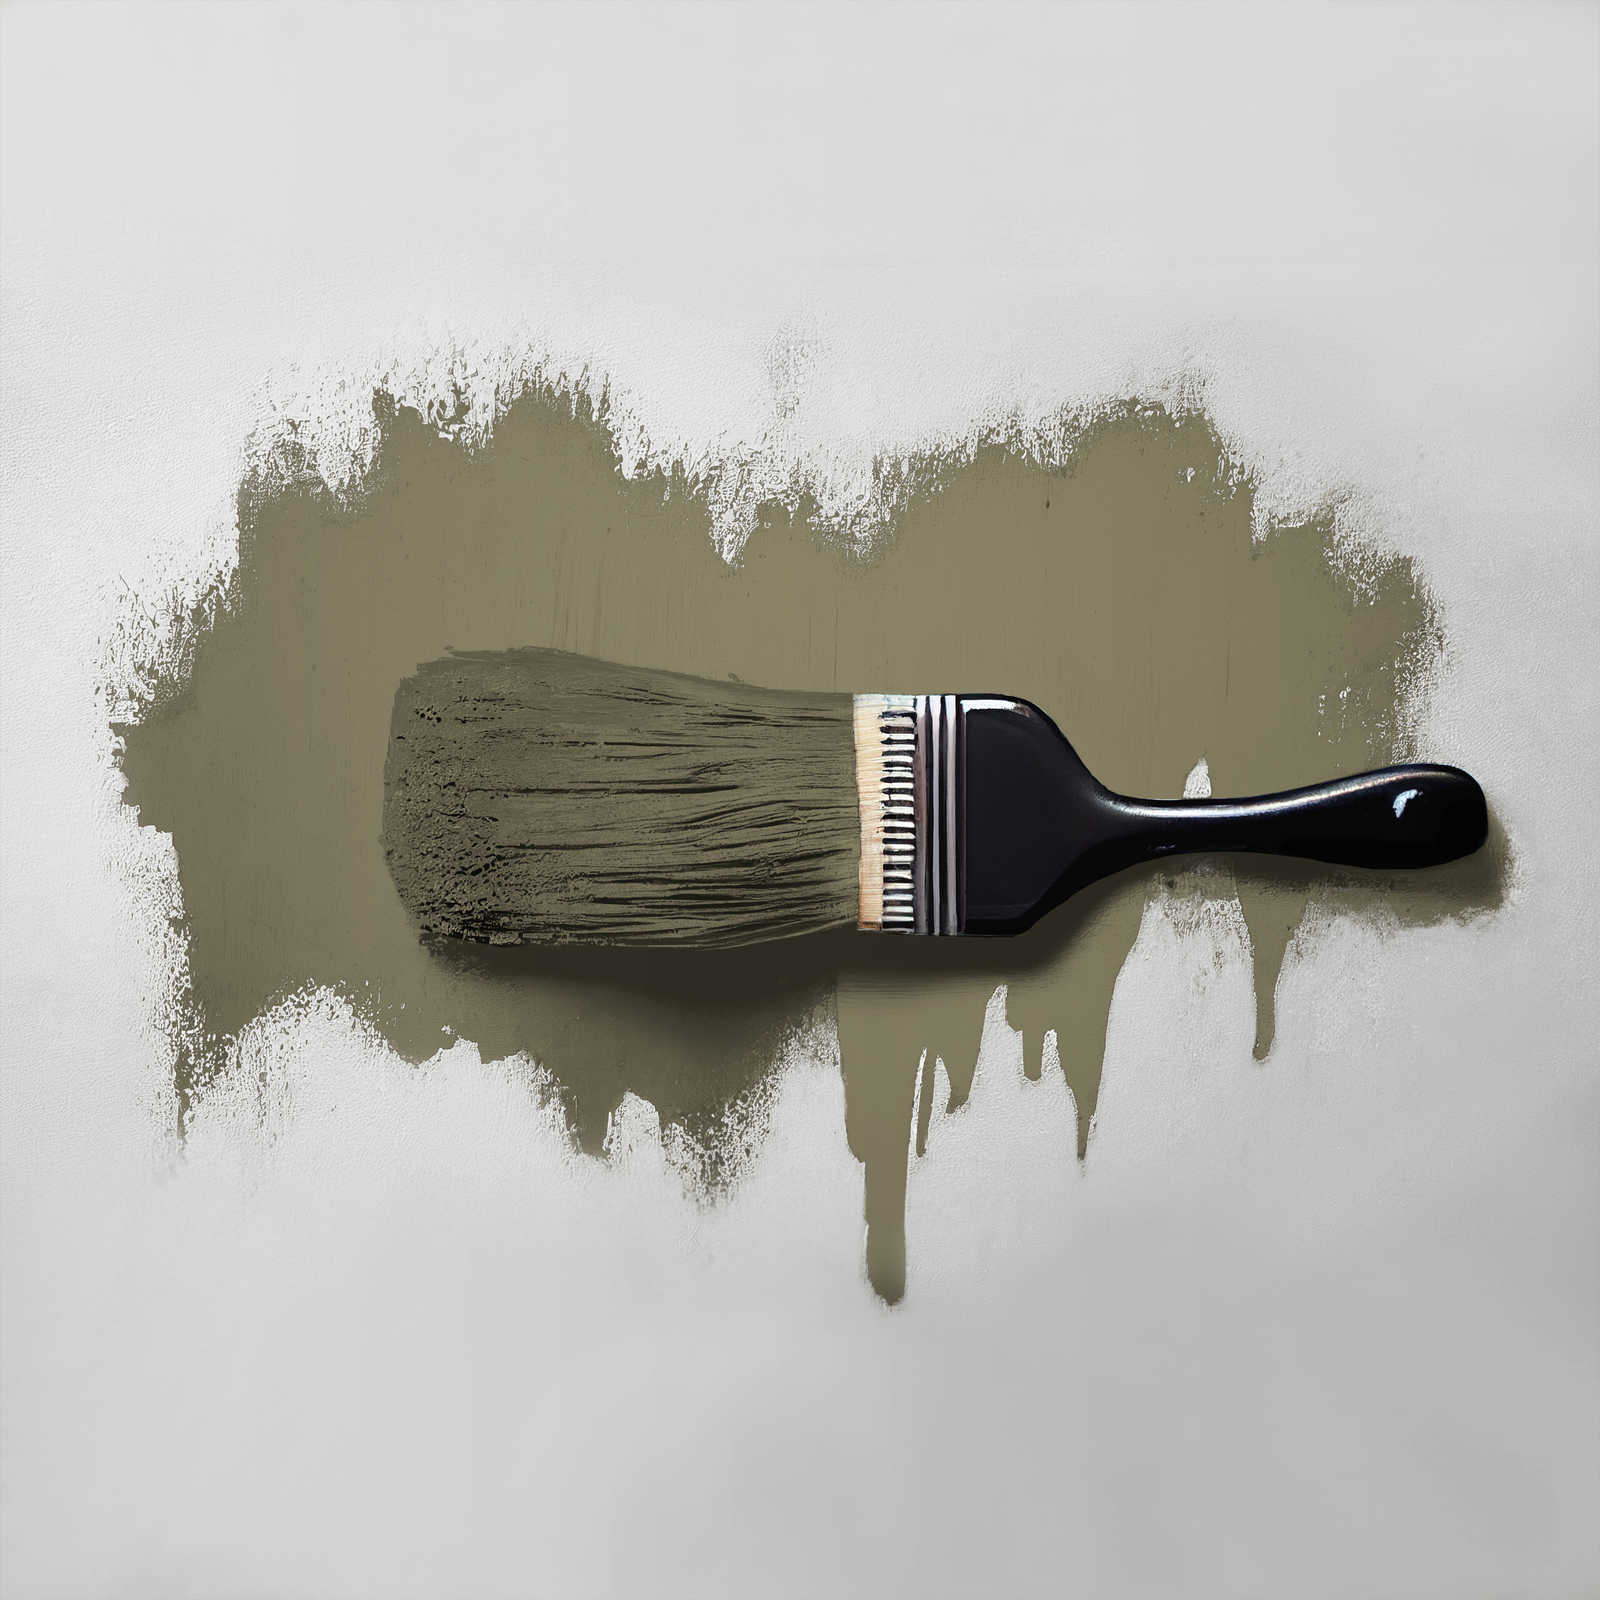             Peinture murale TCK4013 »Ordinary Olive« en ton olive intense – 5,0 litres
        